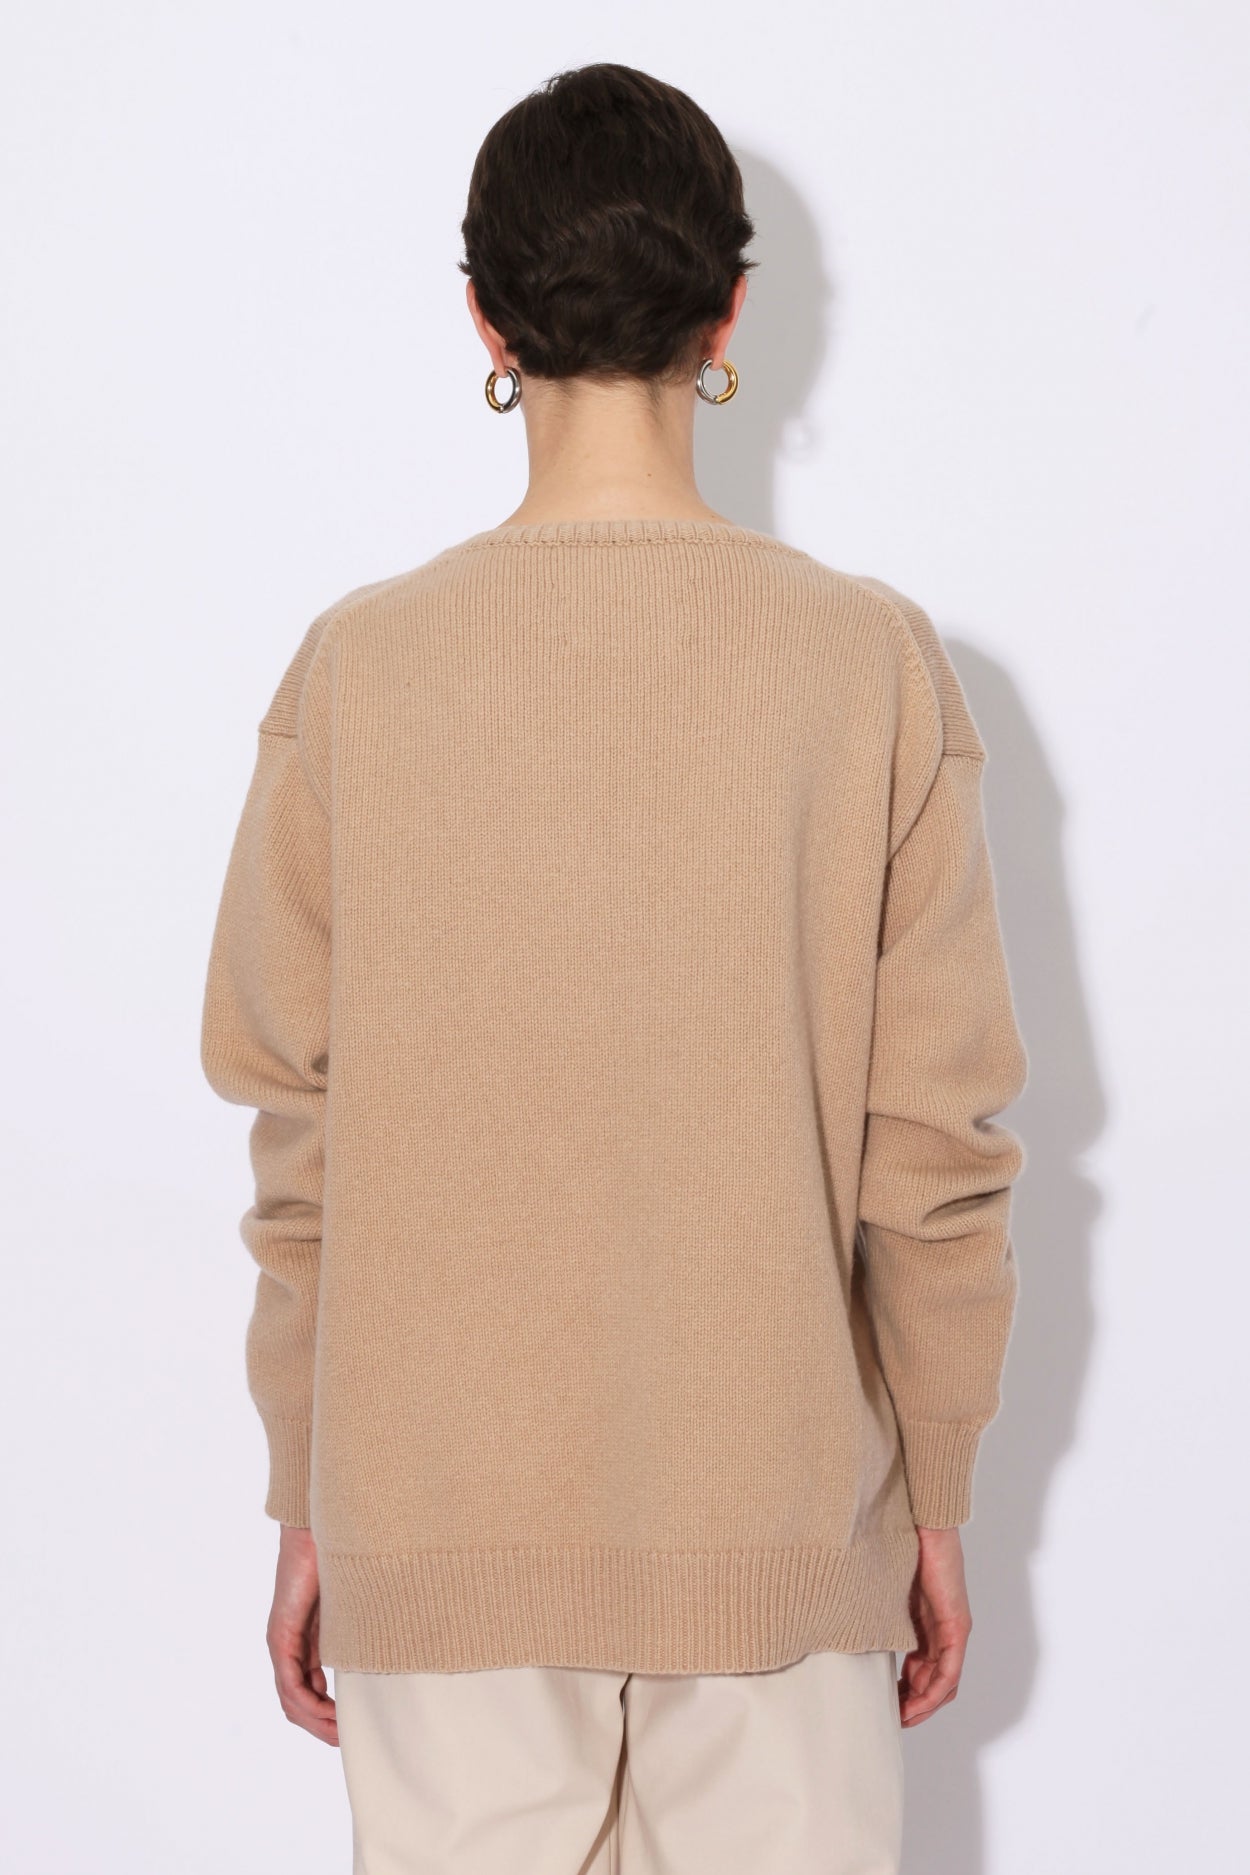 KAYDEN pullover | BEIGE